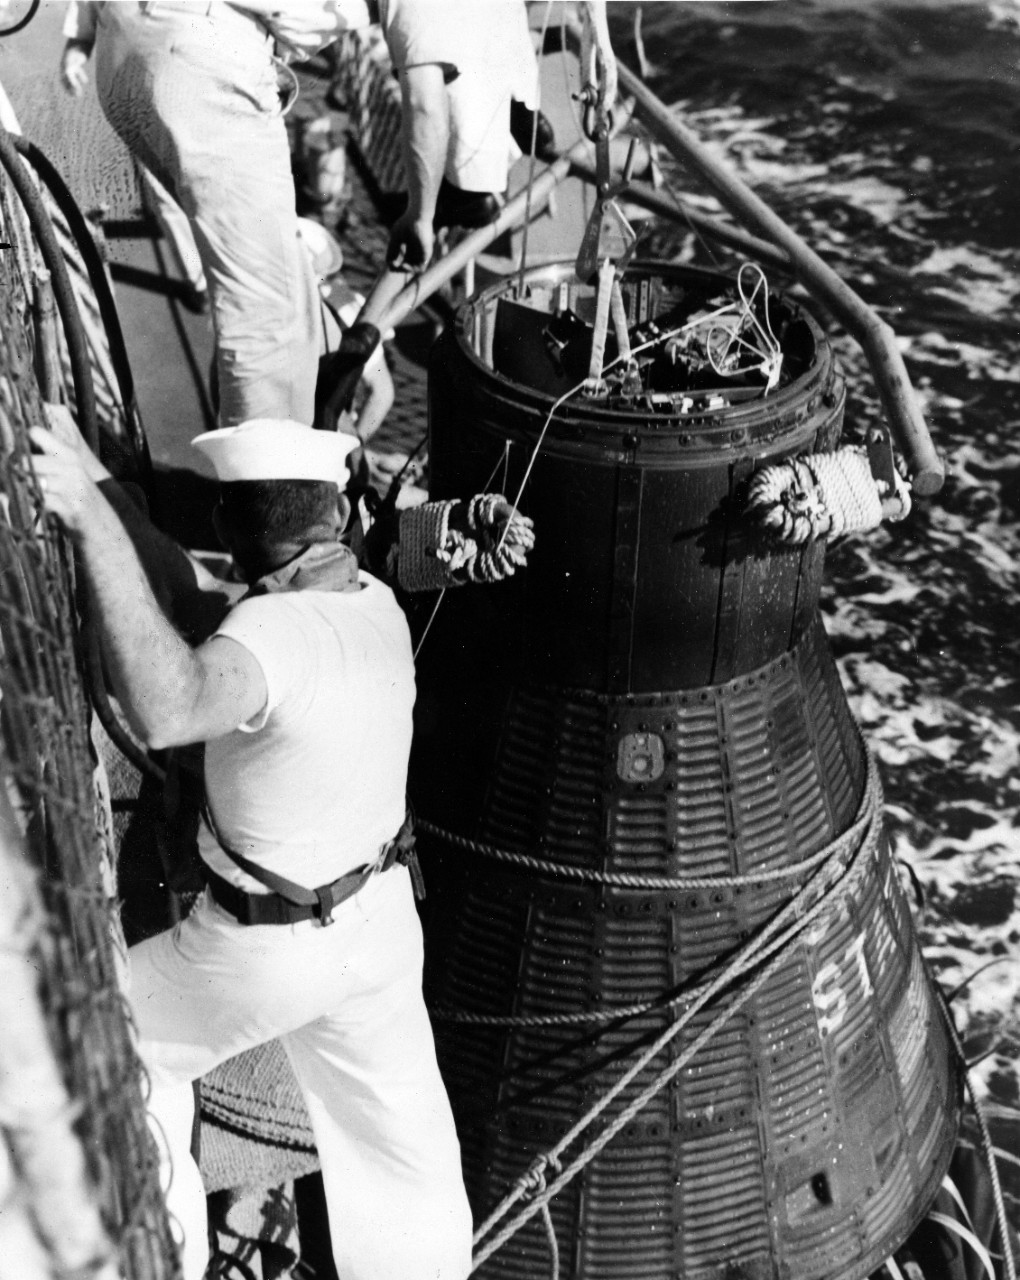 Cape Canaveral, FL - astronaut John H. Glenn's spacecraft, Friendship 7, being brought alongside recovery ship USS Noa (DD-841) after world orbital flight, February 20, 1962